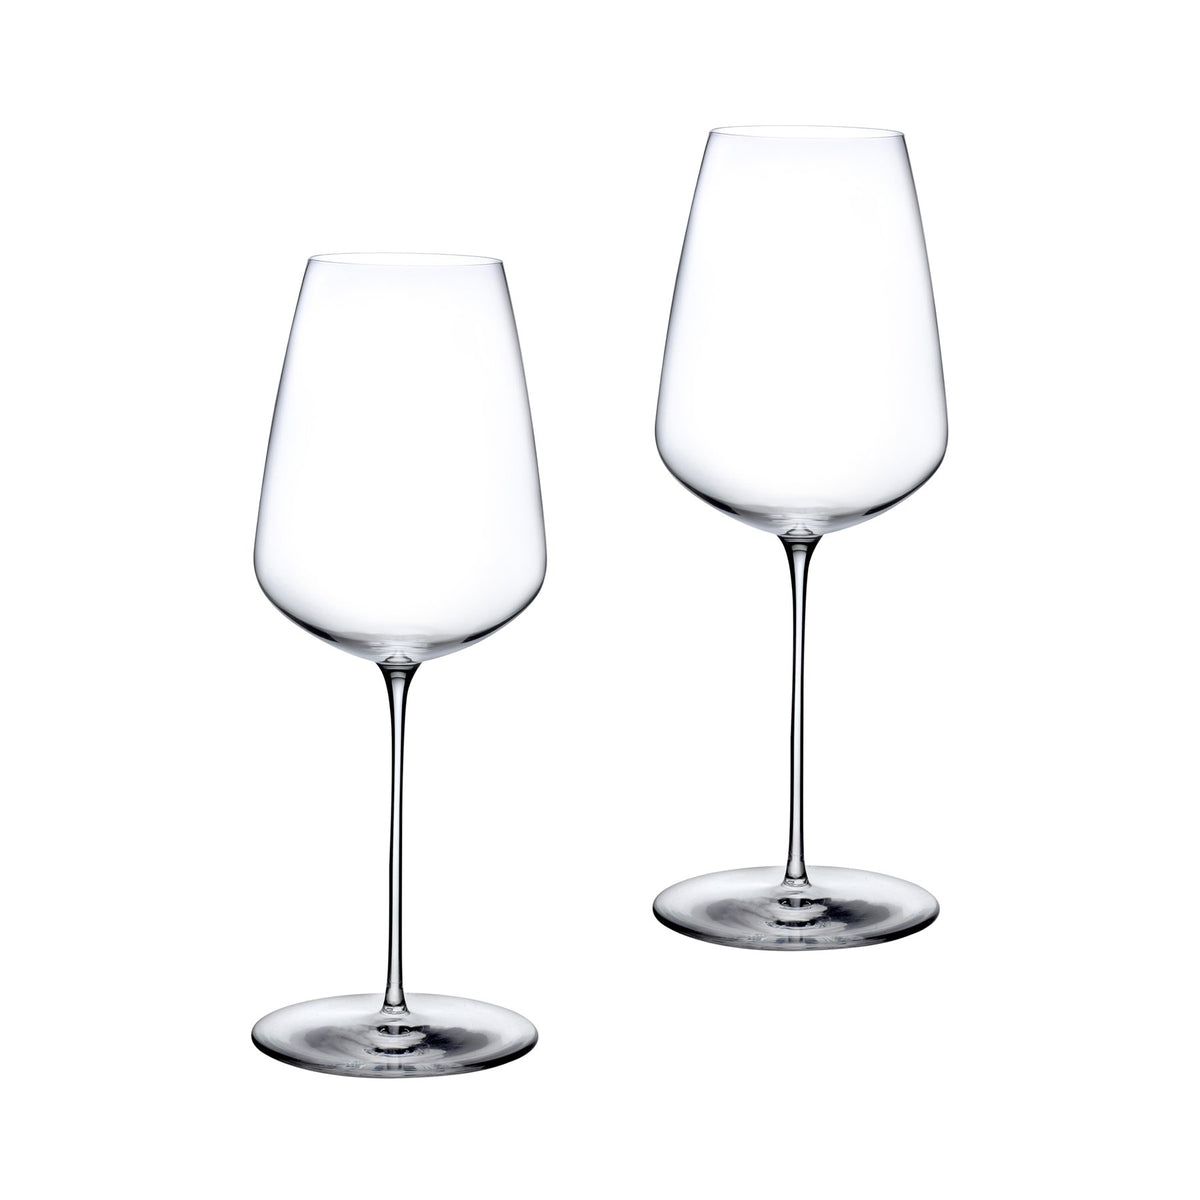 PARNOO Stem Wine Glasses - Tall 19 oz Wine Glass for White & Red Wine -  Dishwasher-Friendly Stemware…See more PARNOO Stem Wine Glasses - Tall 19 oz